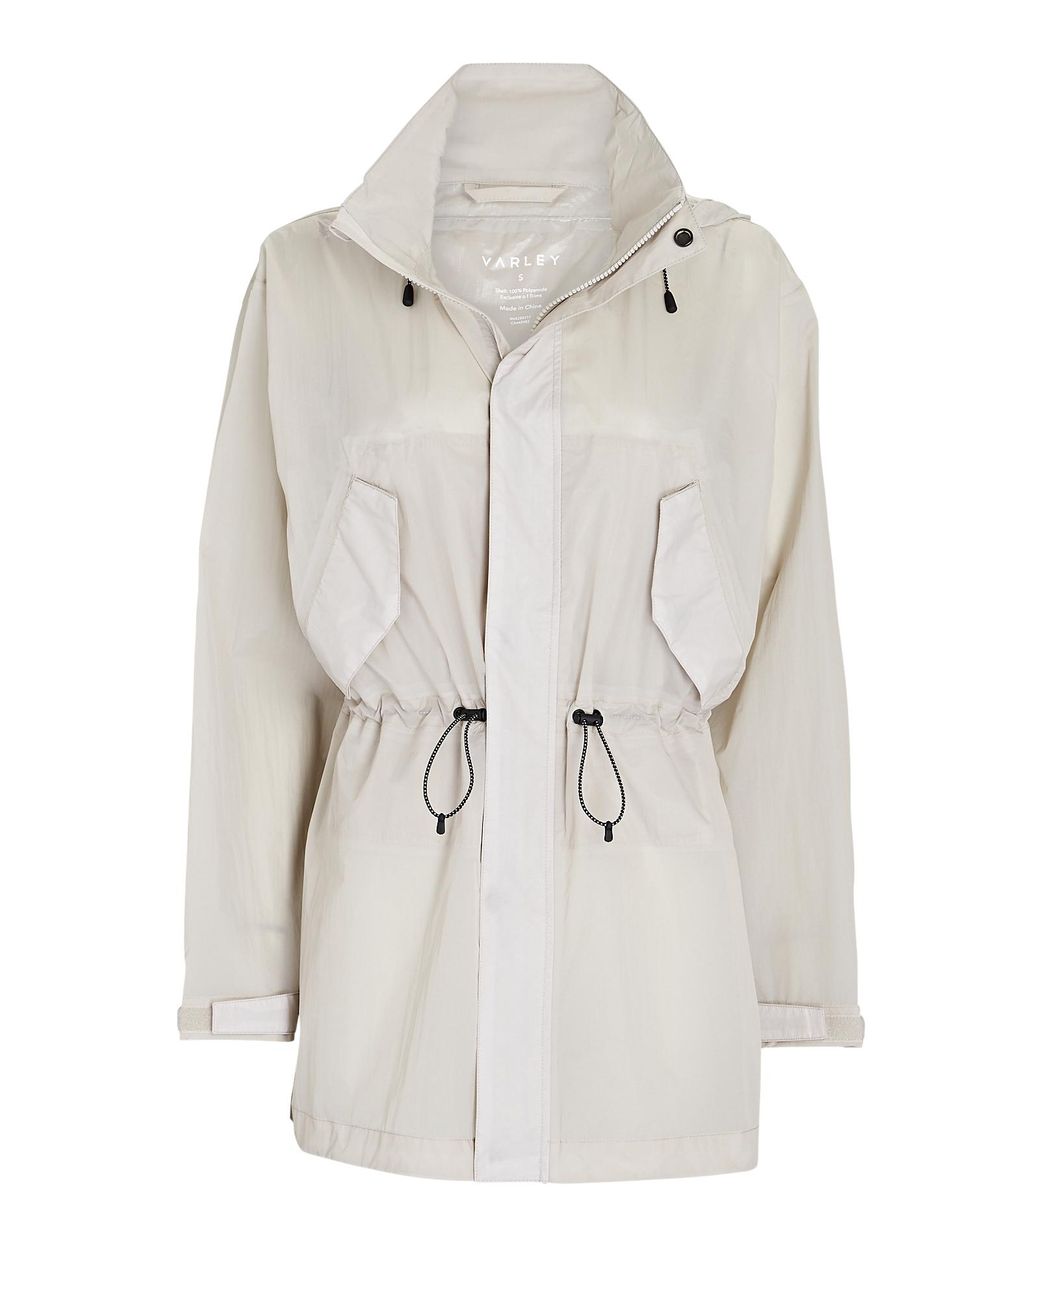 Varley Synthetic Williams Hooded Rain Jacket in Grey (Gray) | Lyst